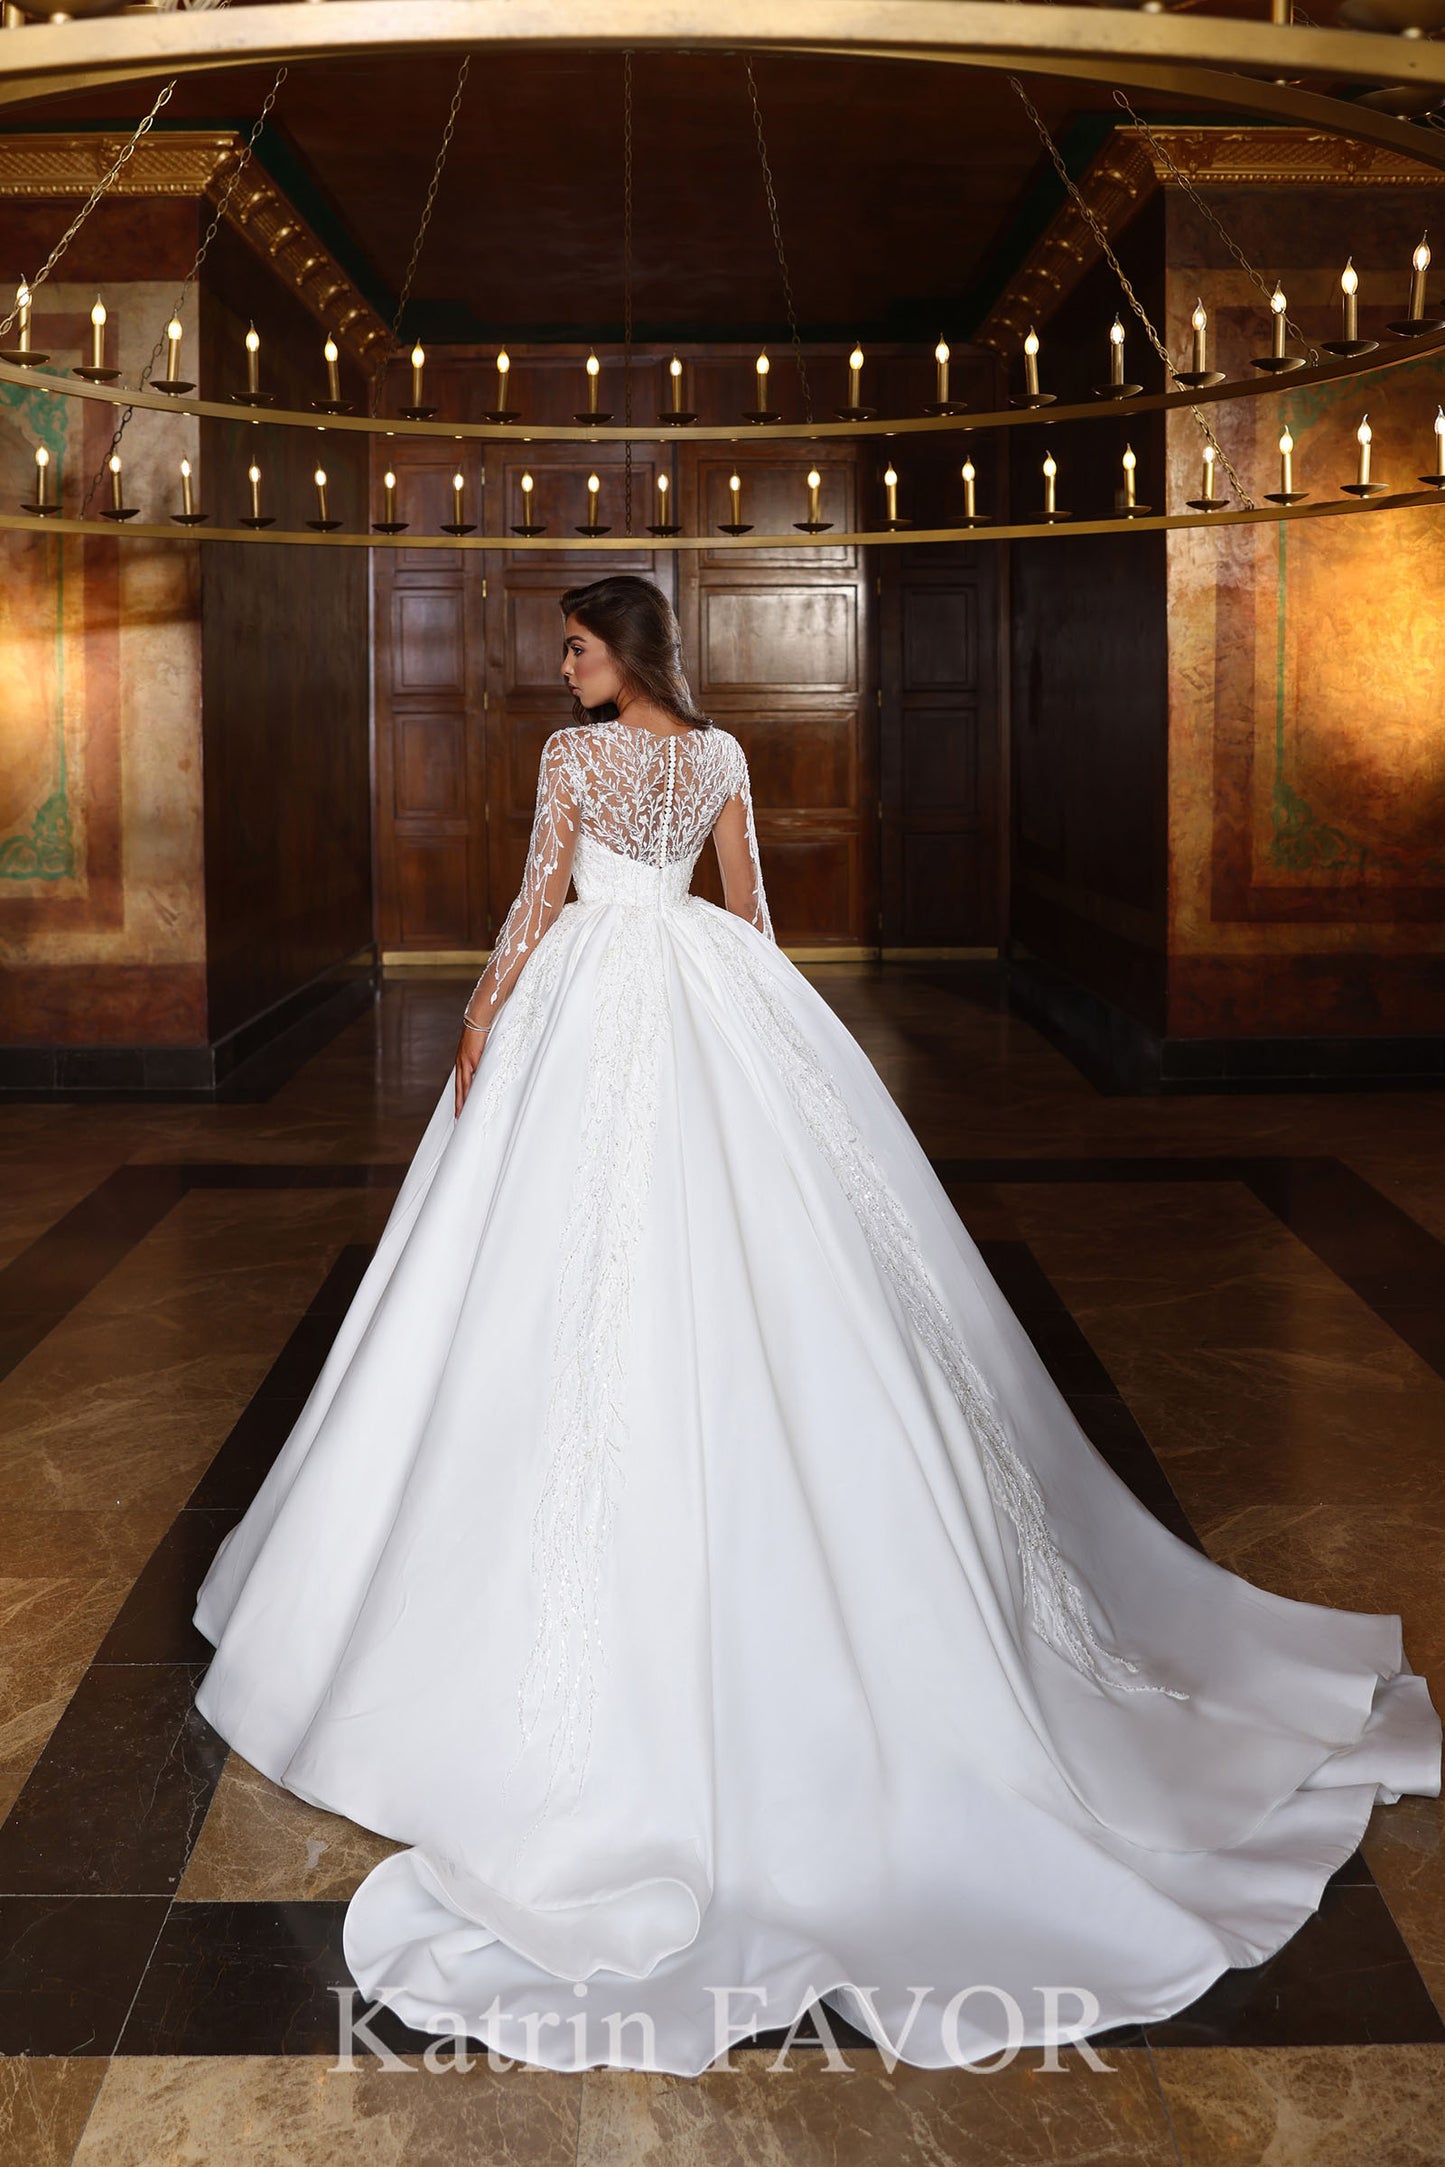 KatrinFAVORboutique-Princess ballgown satin wedding dress